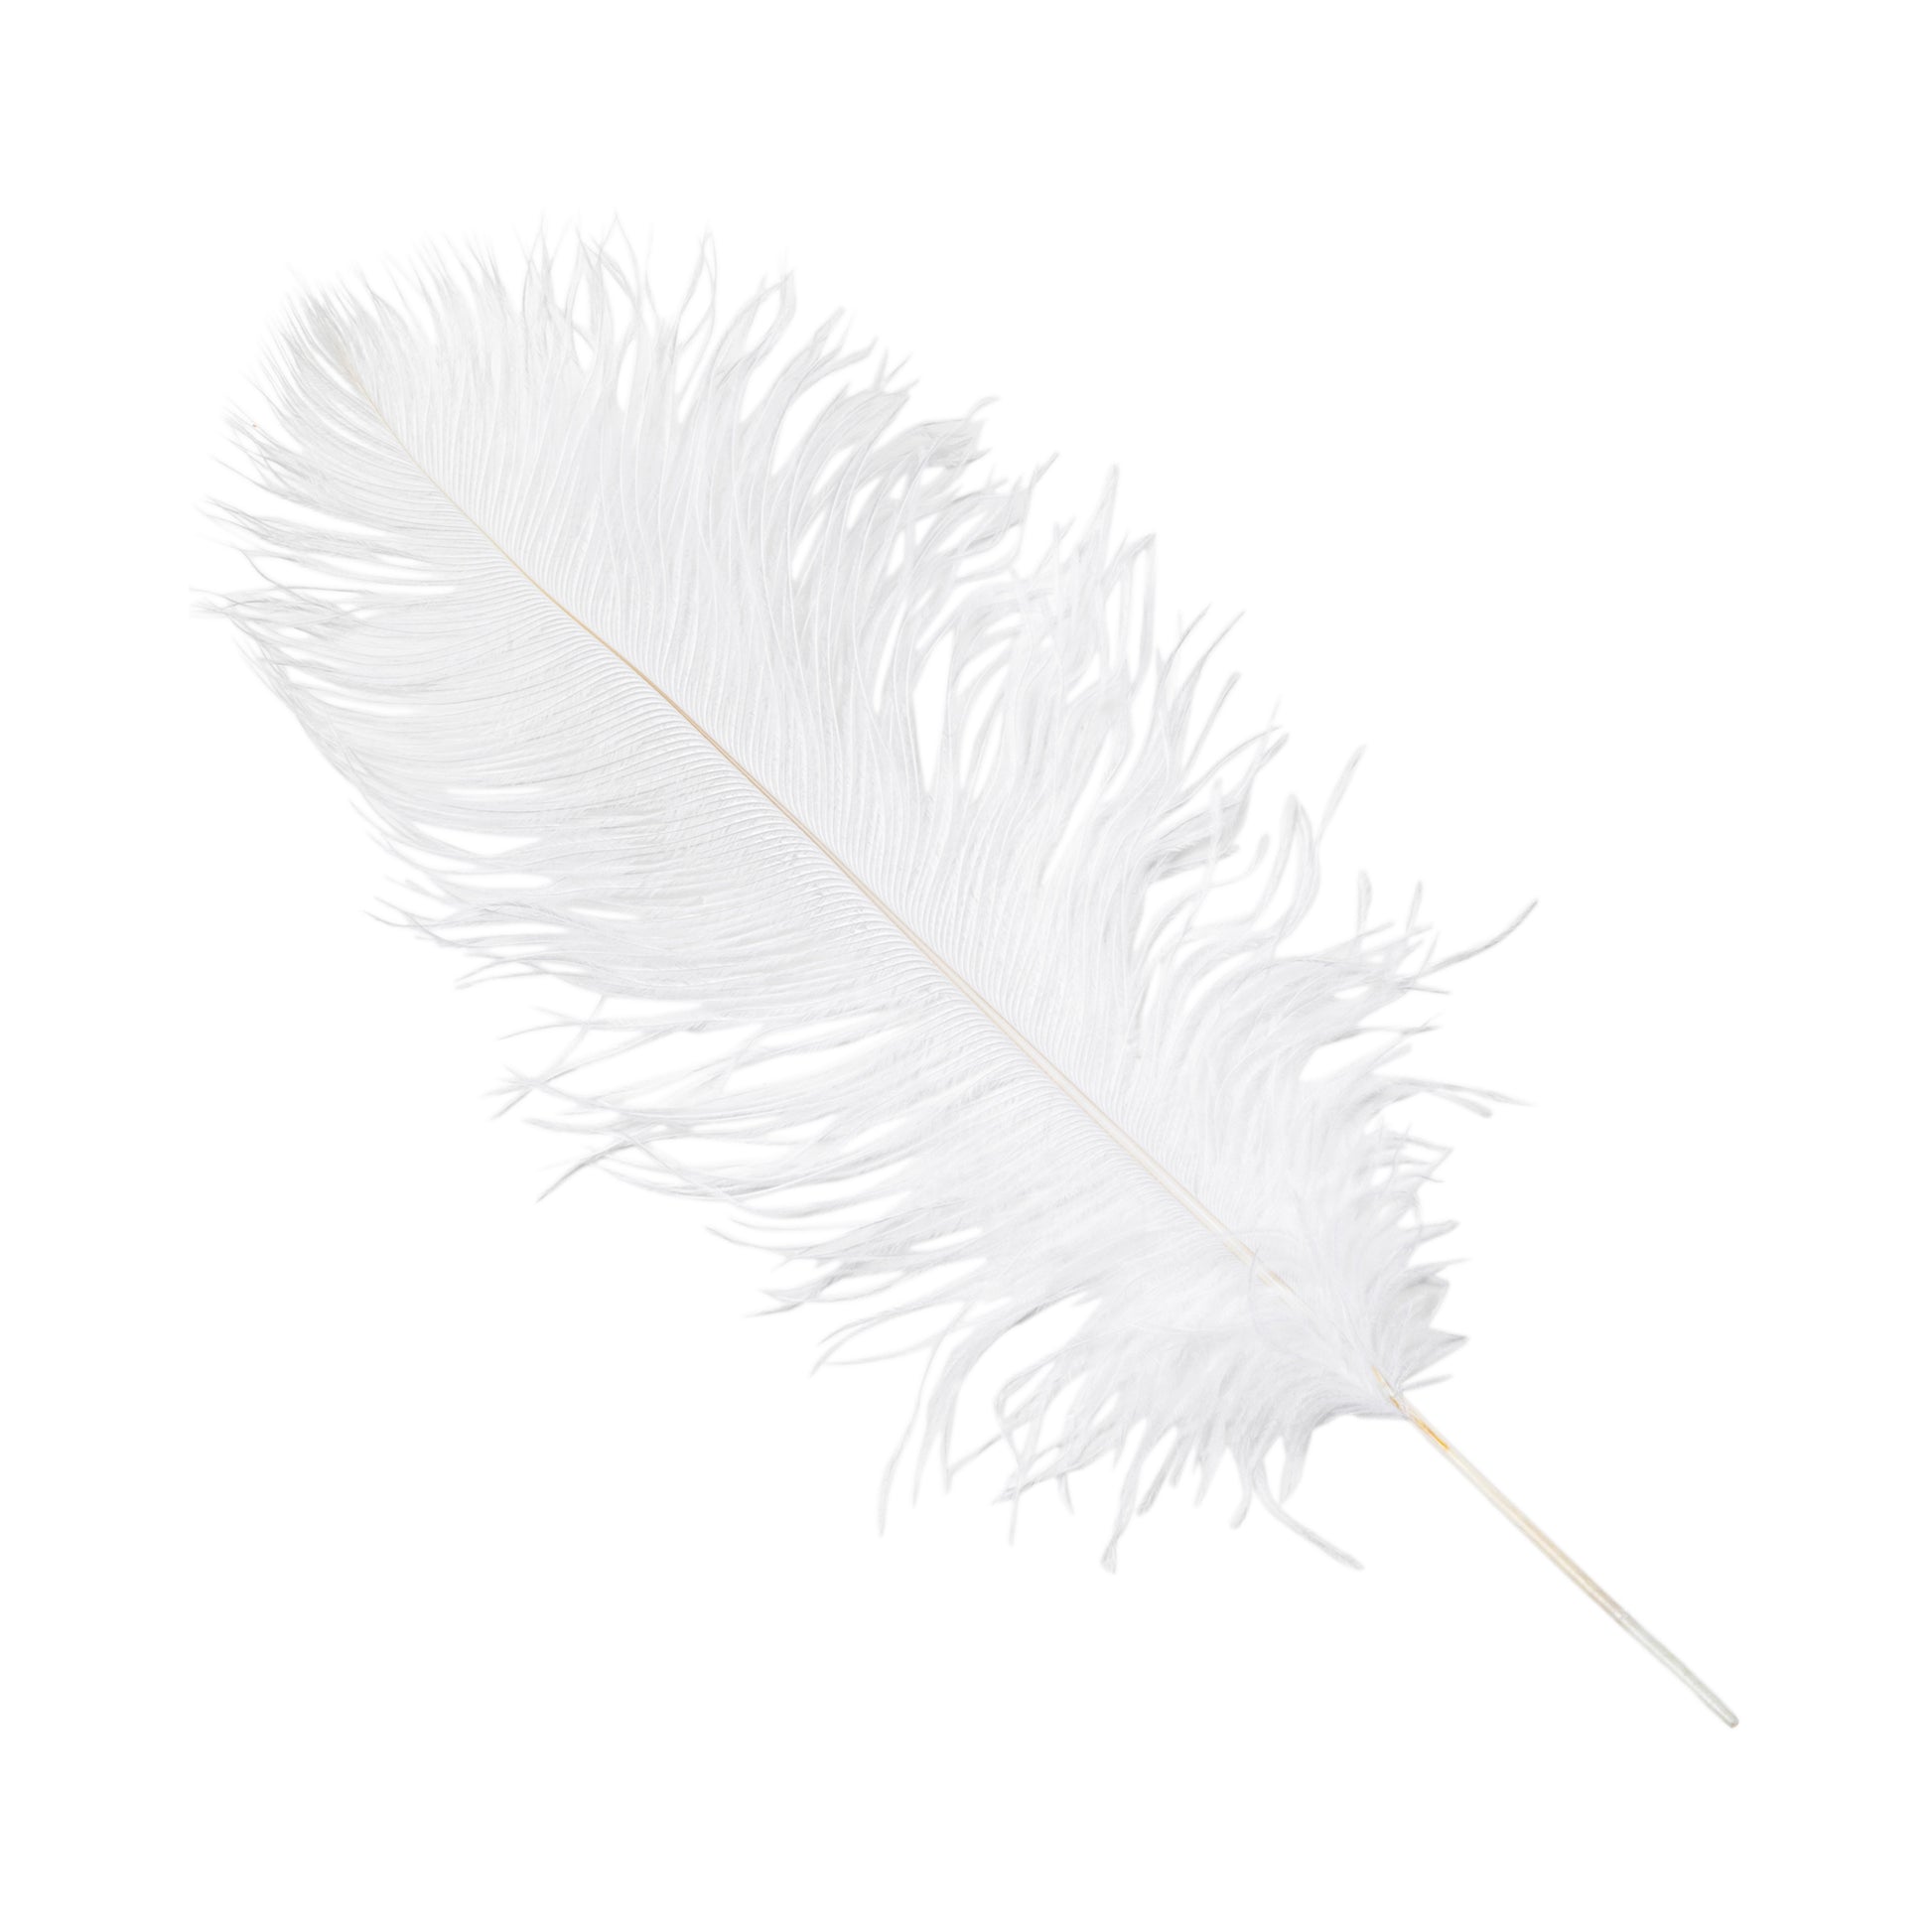 Ostrich Feathers 16-18 (10 pcs) - White